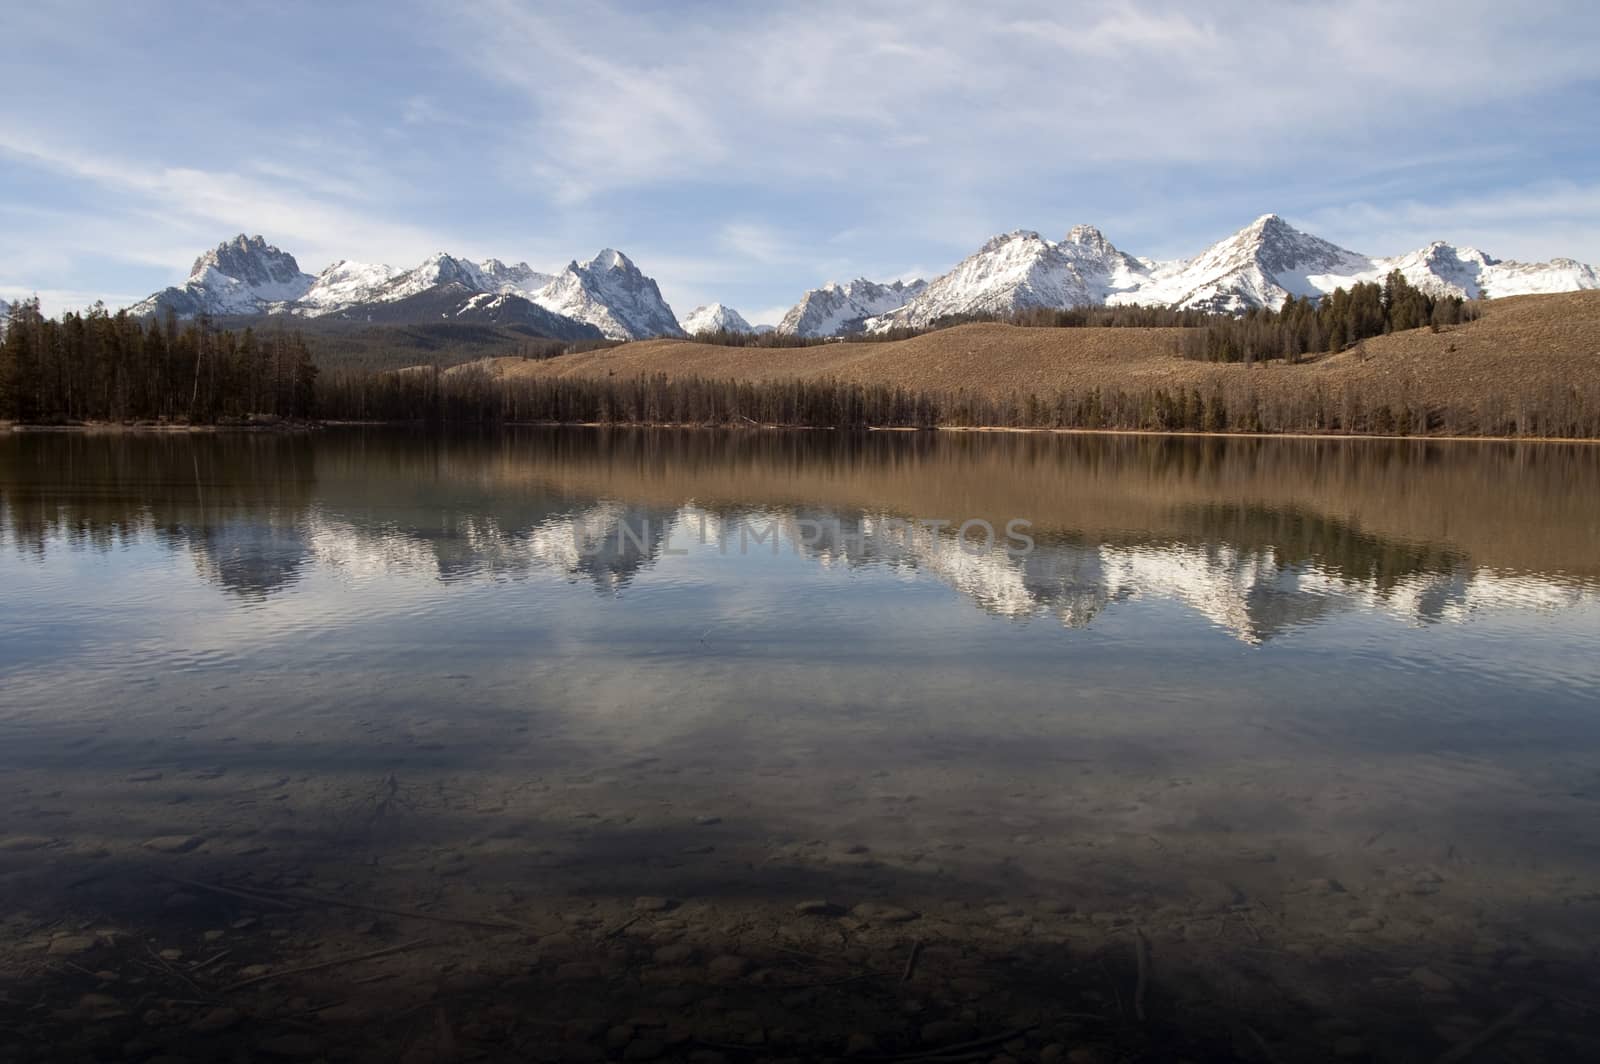 Mountain Reflection in smooth lake water Landscape mountain range